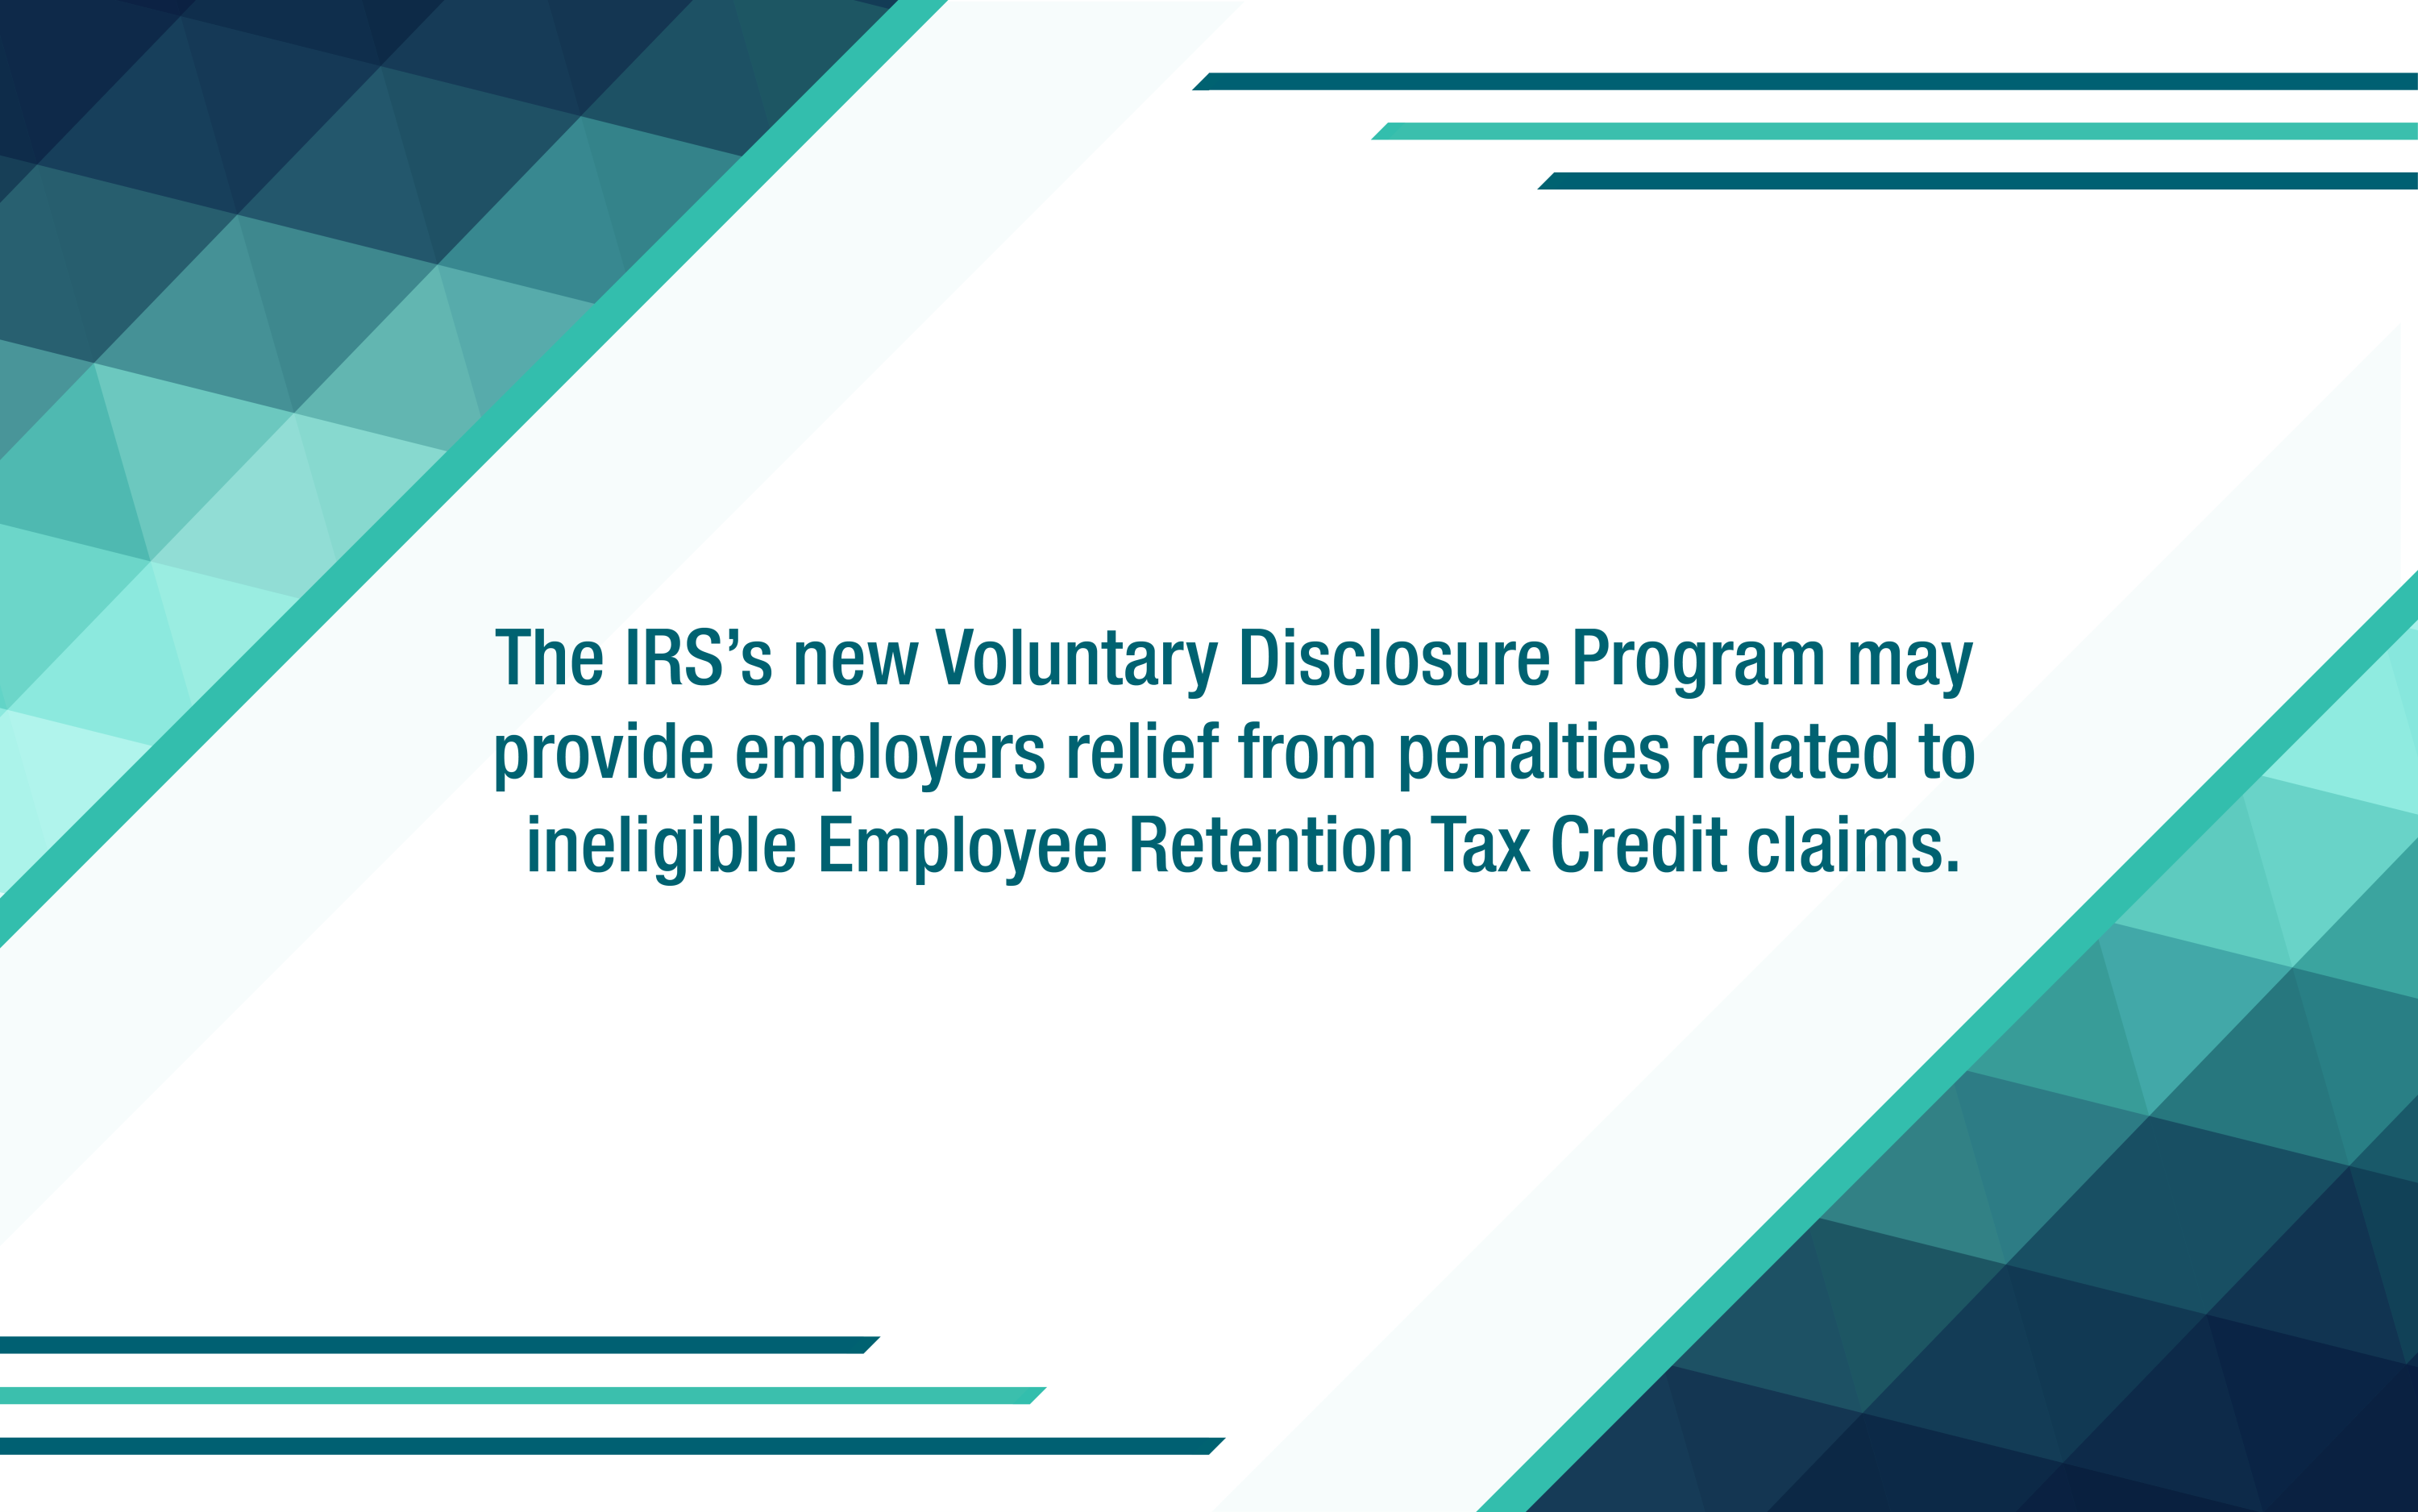 The IRS unveils ERTC relief program for employers